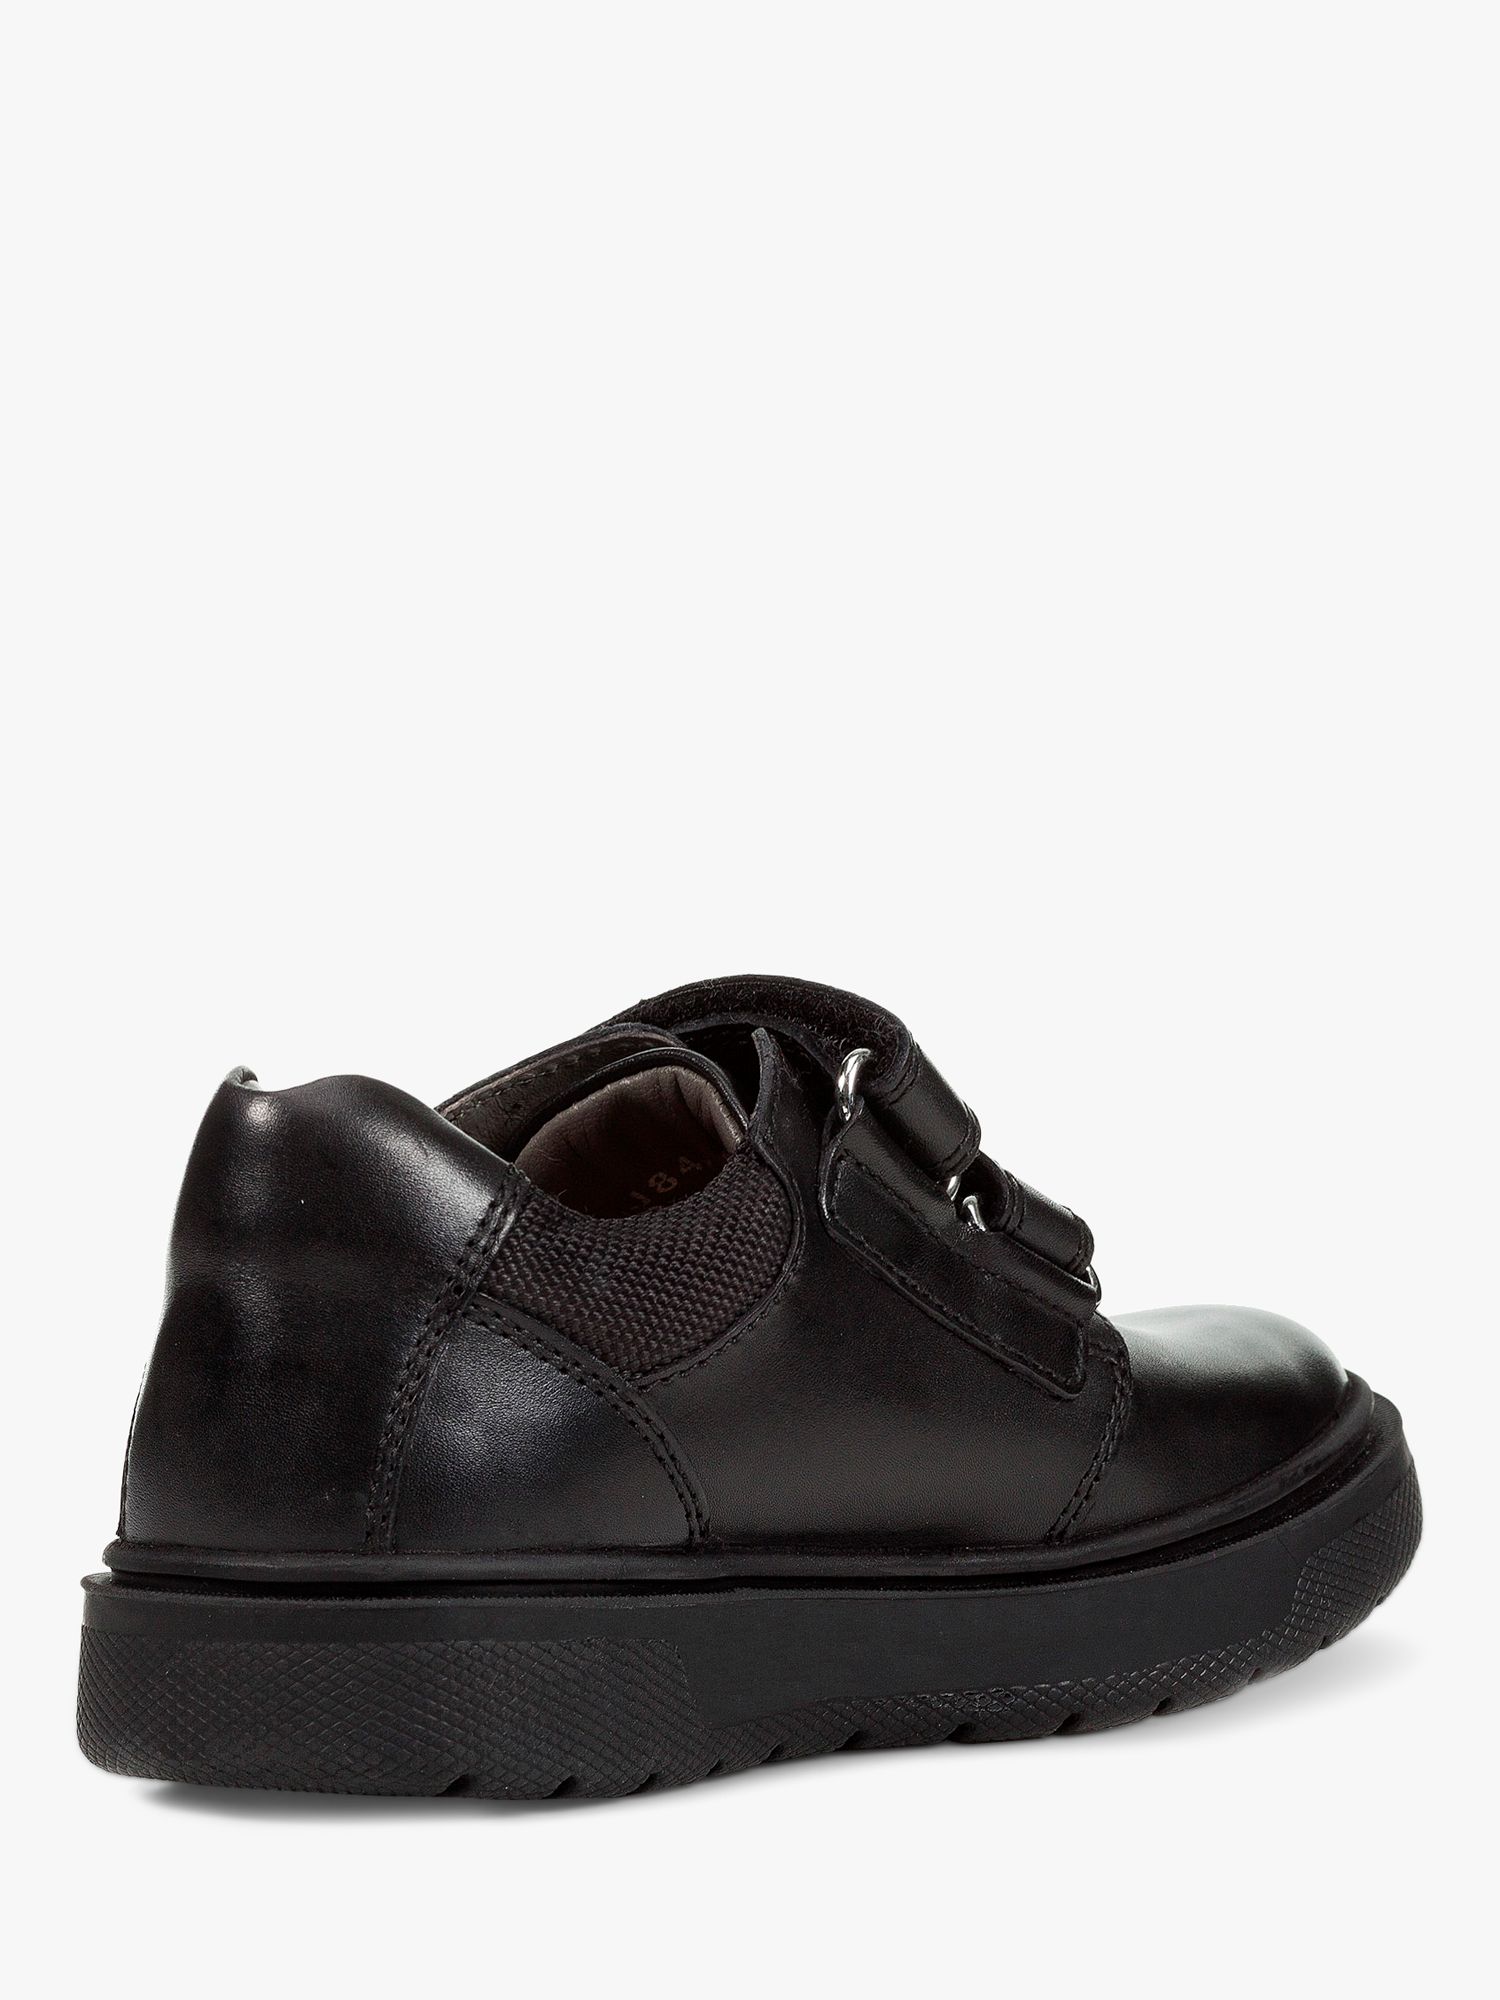 Buy Geox Kids' Riddock Riptape School Shoes, Black Online at johnlewis.com